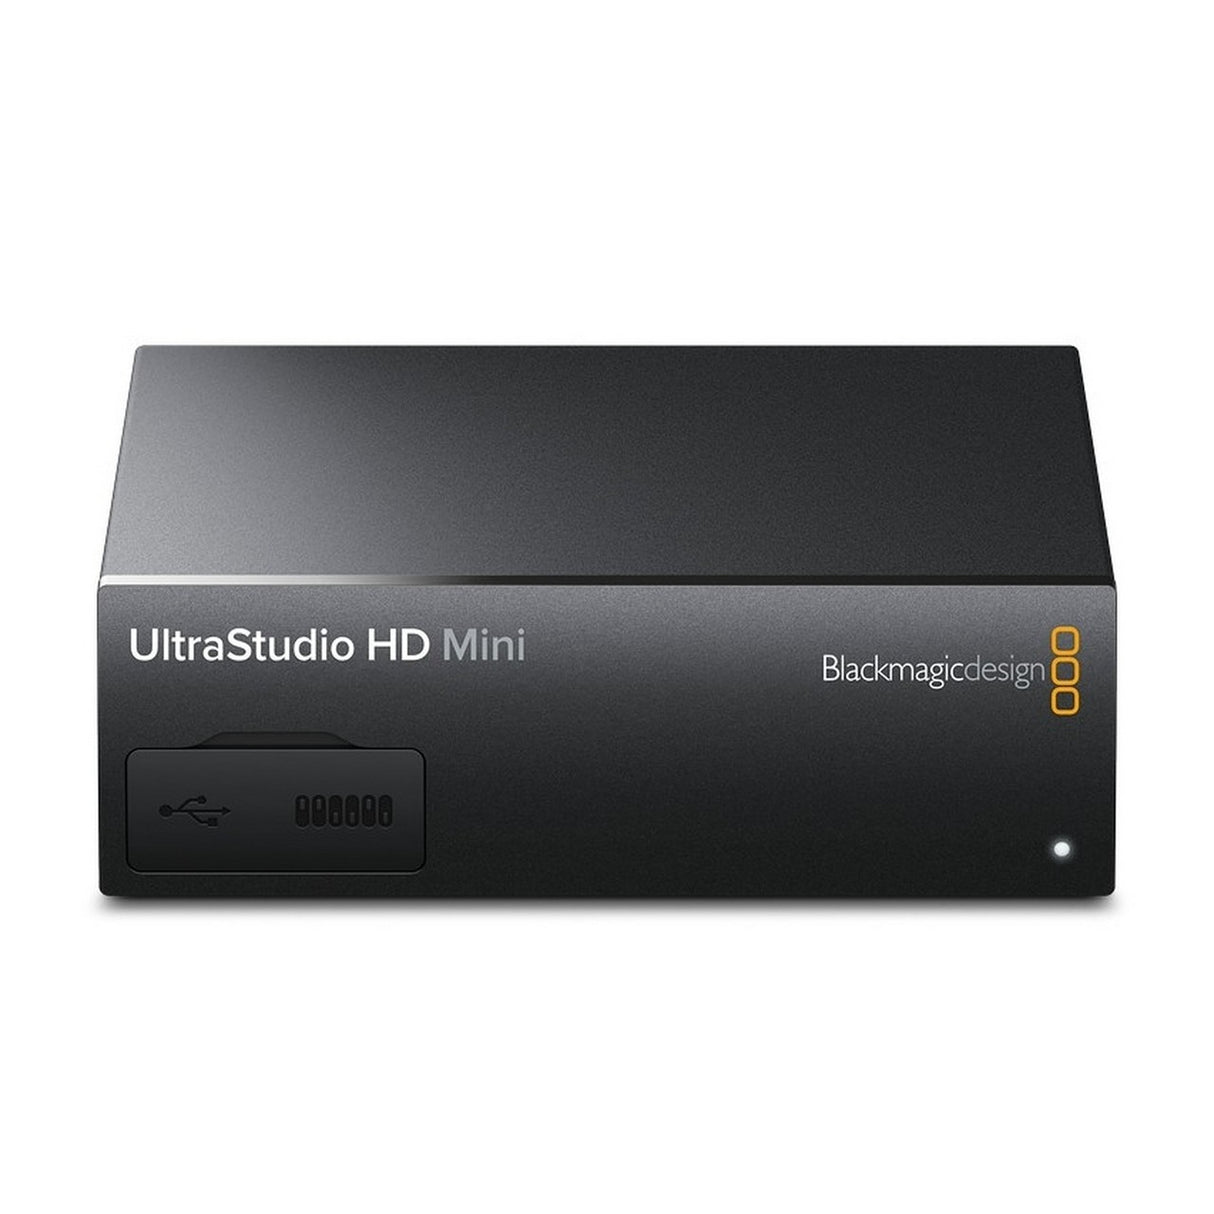 Blackmagic Design UltraStudio HD Mini | Video Capture Playback Device